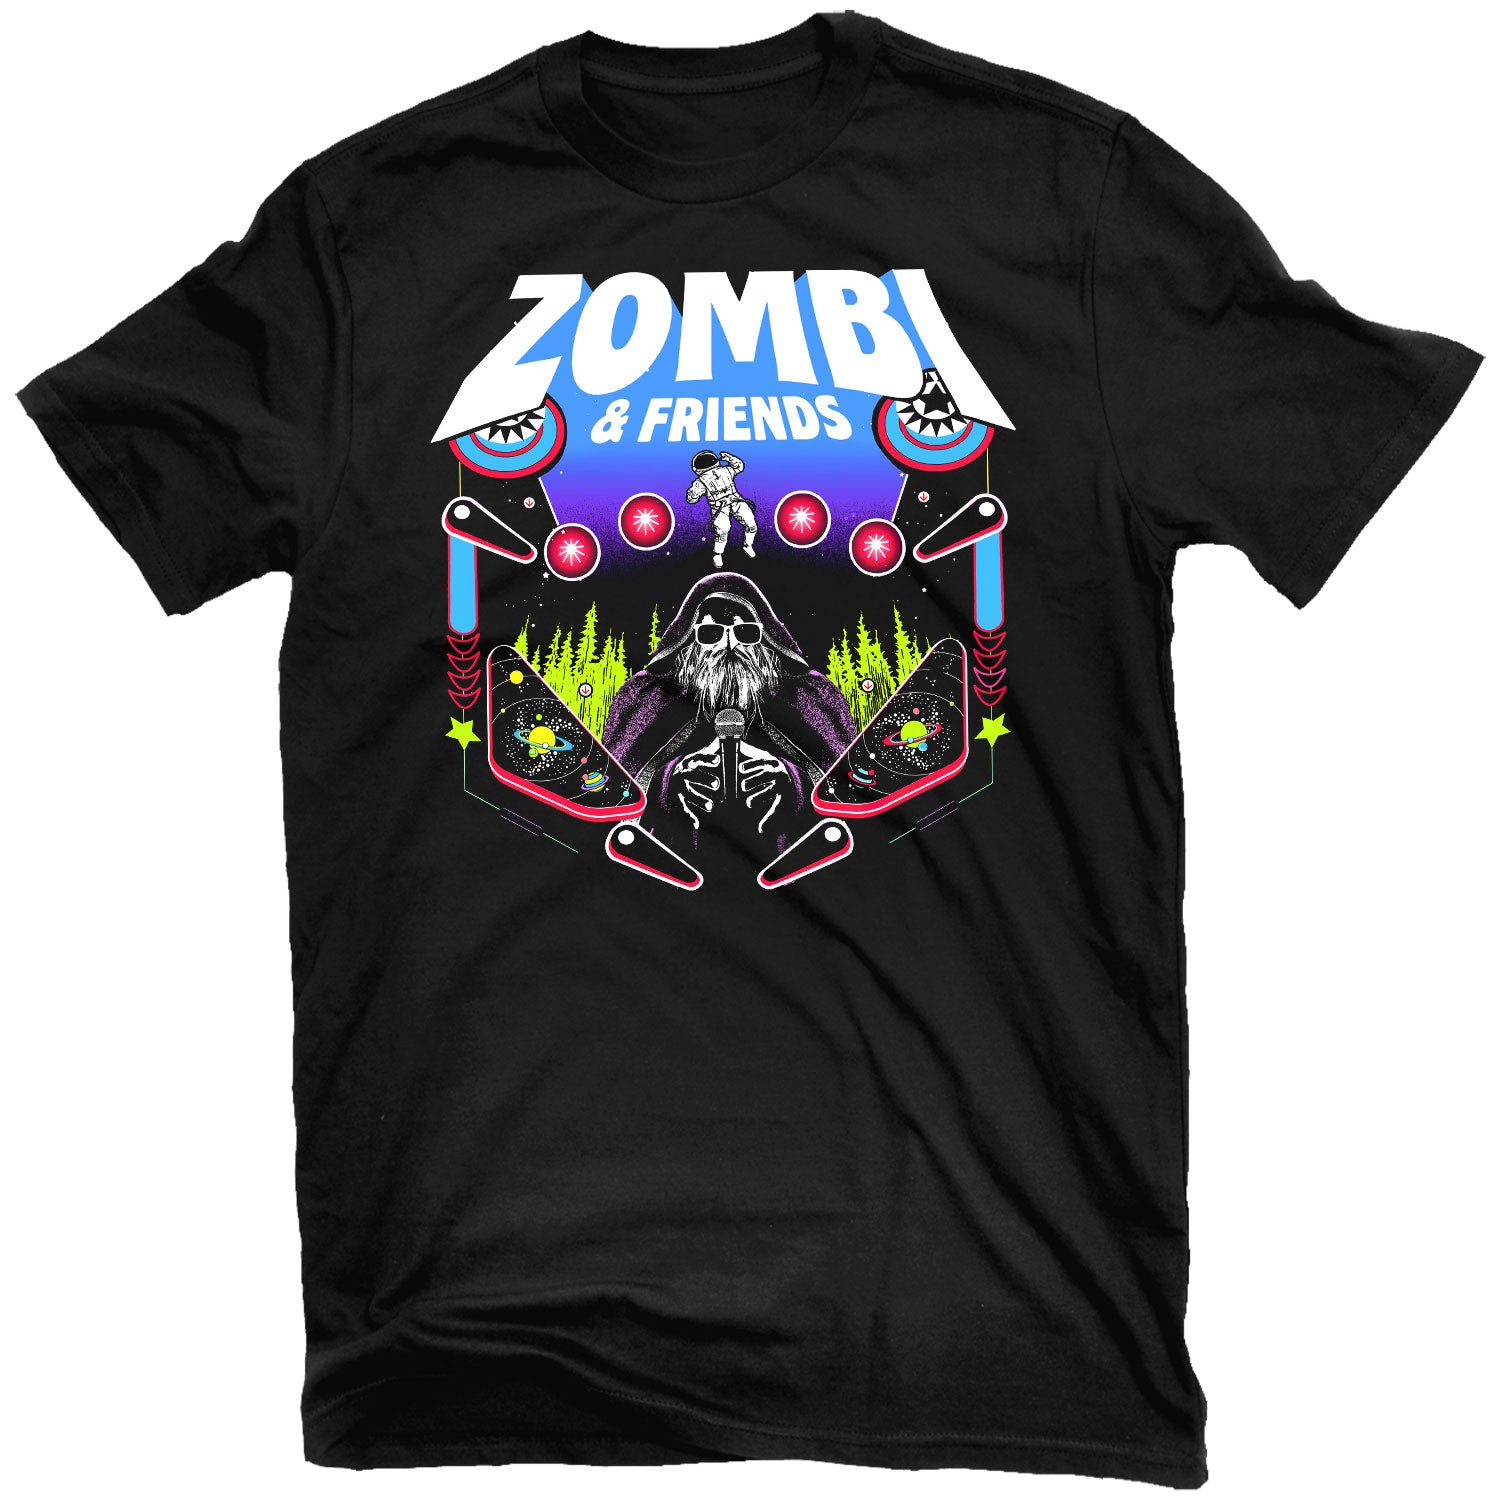 Zombi "Zombi & Friends, Volume 1" T-Shirt